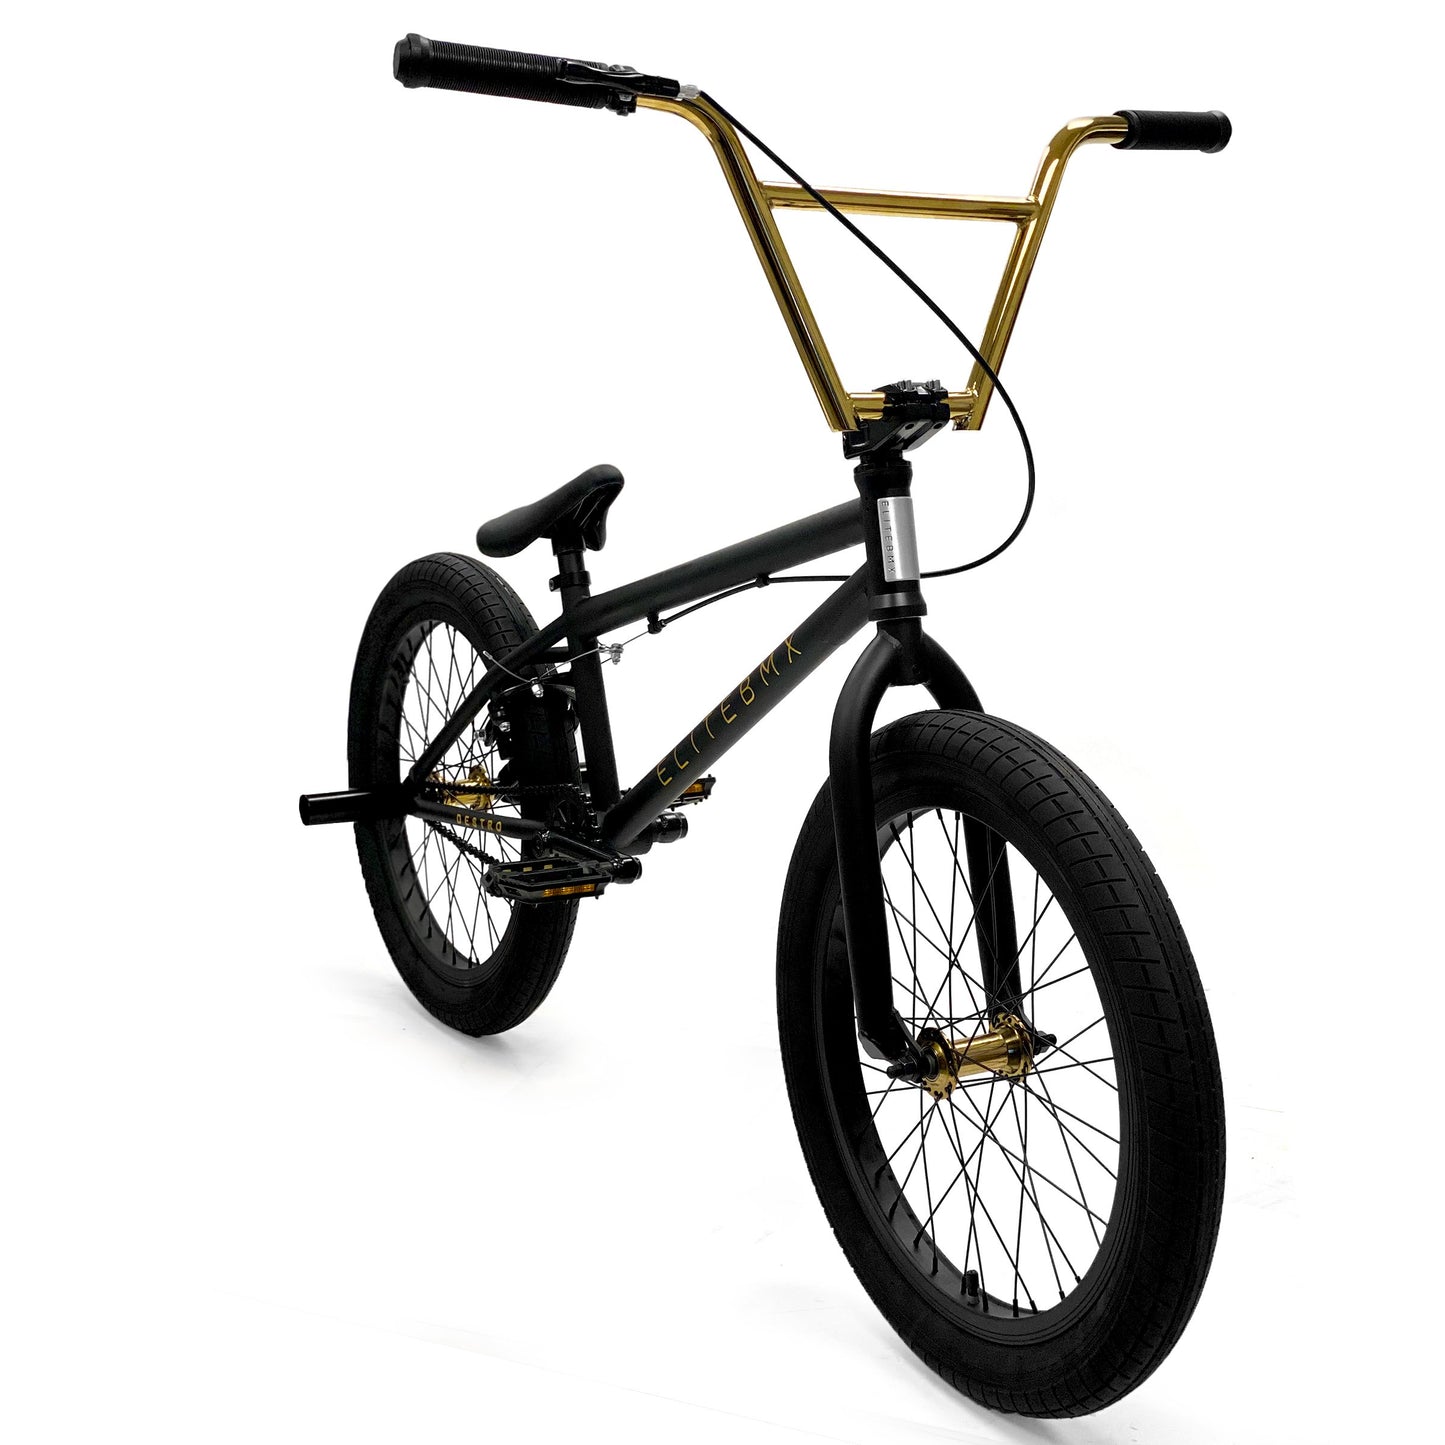 Destro BMX Bike - Black Gold | Elite BMX Destro Bikes | Desto Bike | Elite BMX Bike | BMX Bikes | Elite Bikes | Affordable Bikes | Affordable BMX Bikes | Bike Lovers USA